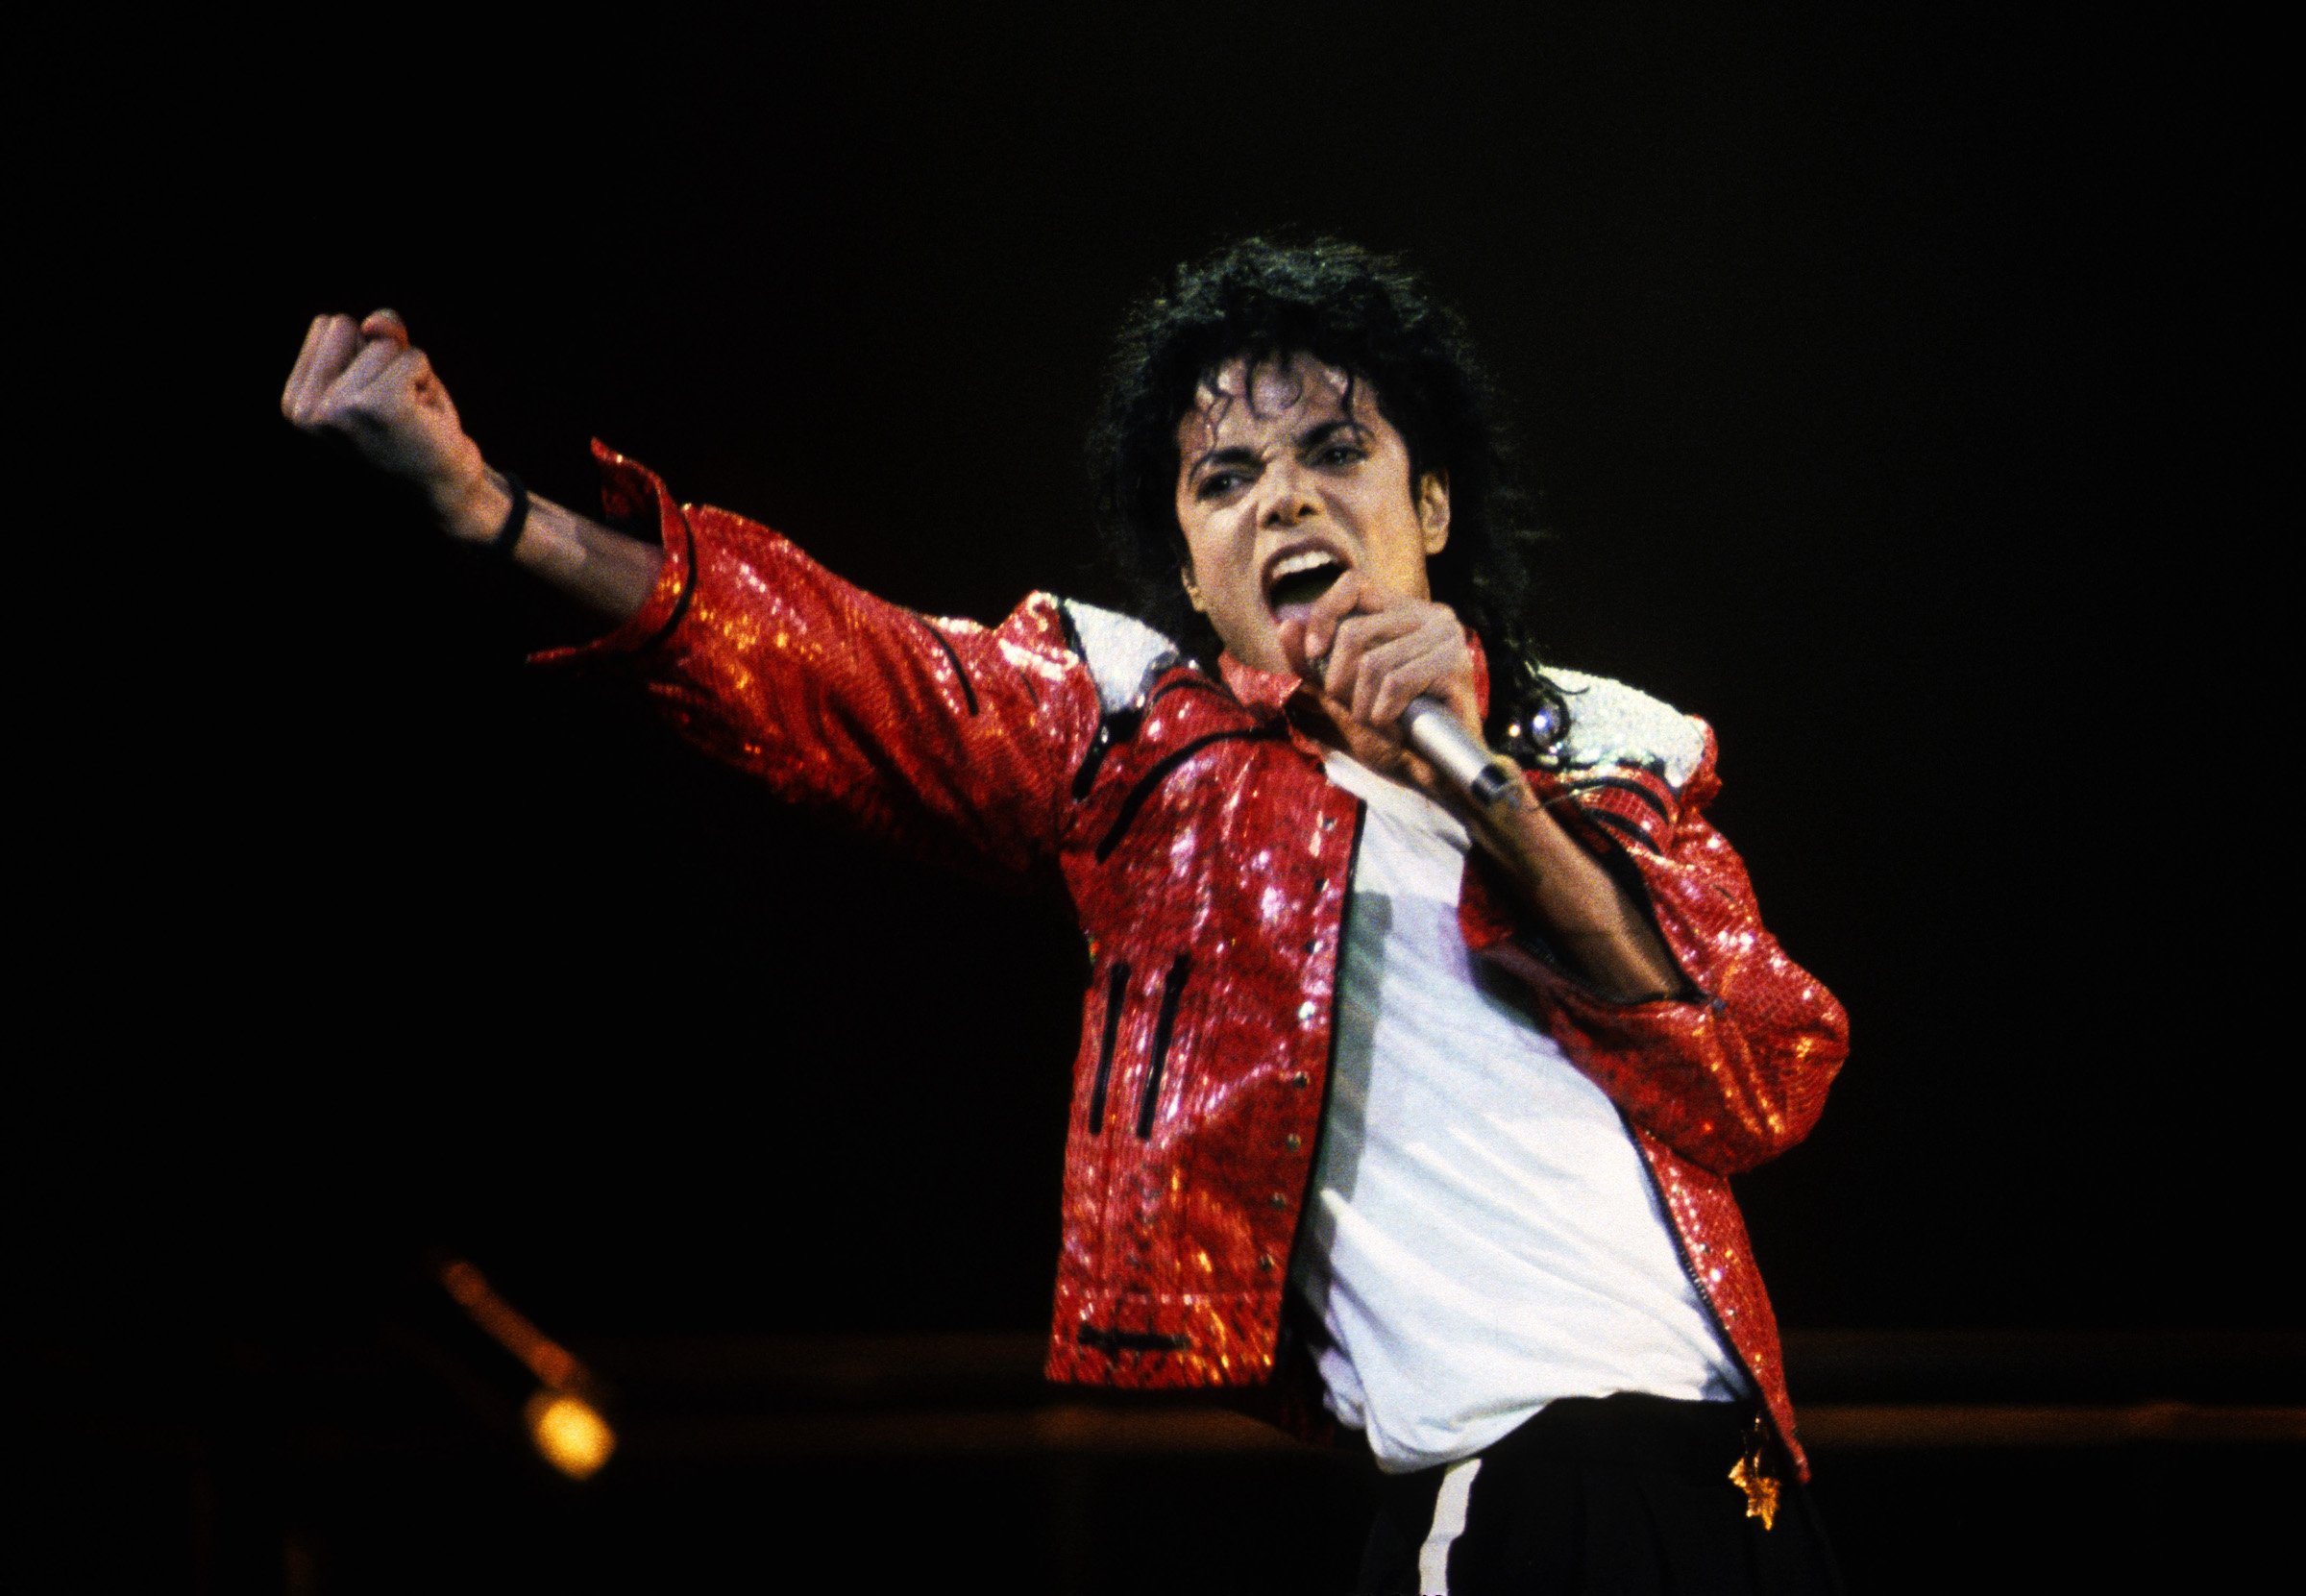 Michael Jackson, who has been an inspiration for Beyoncé